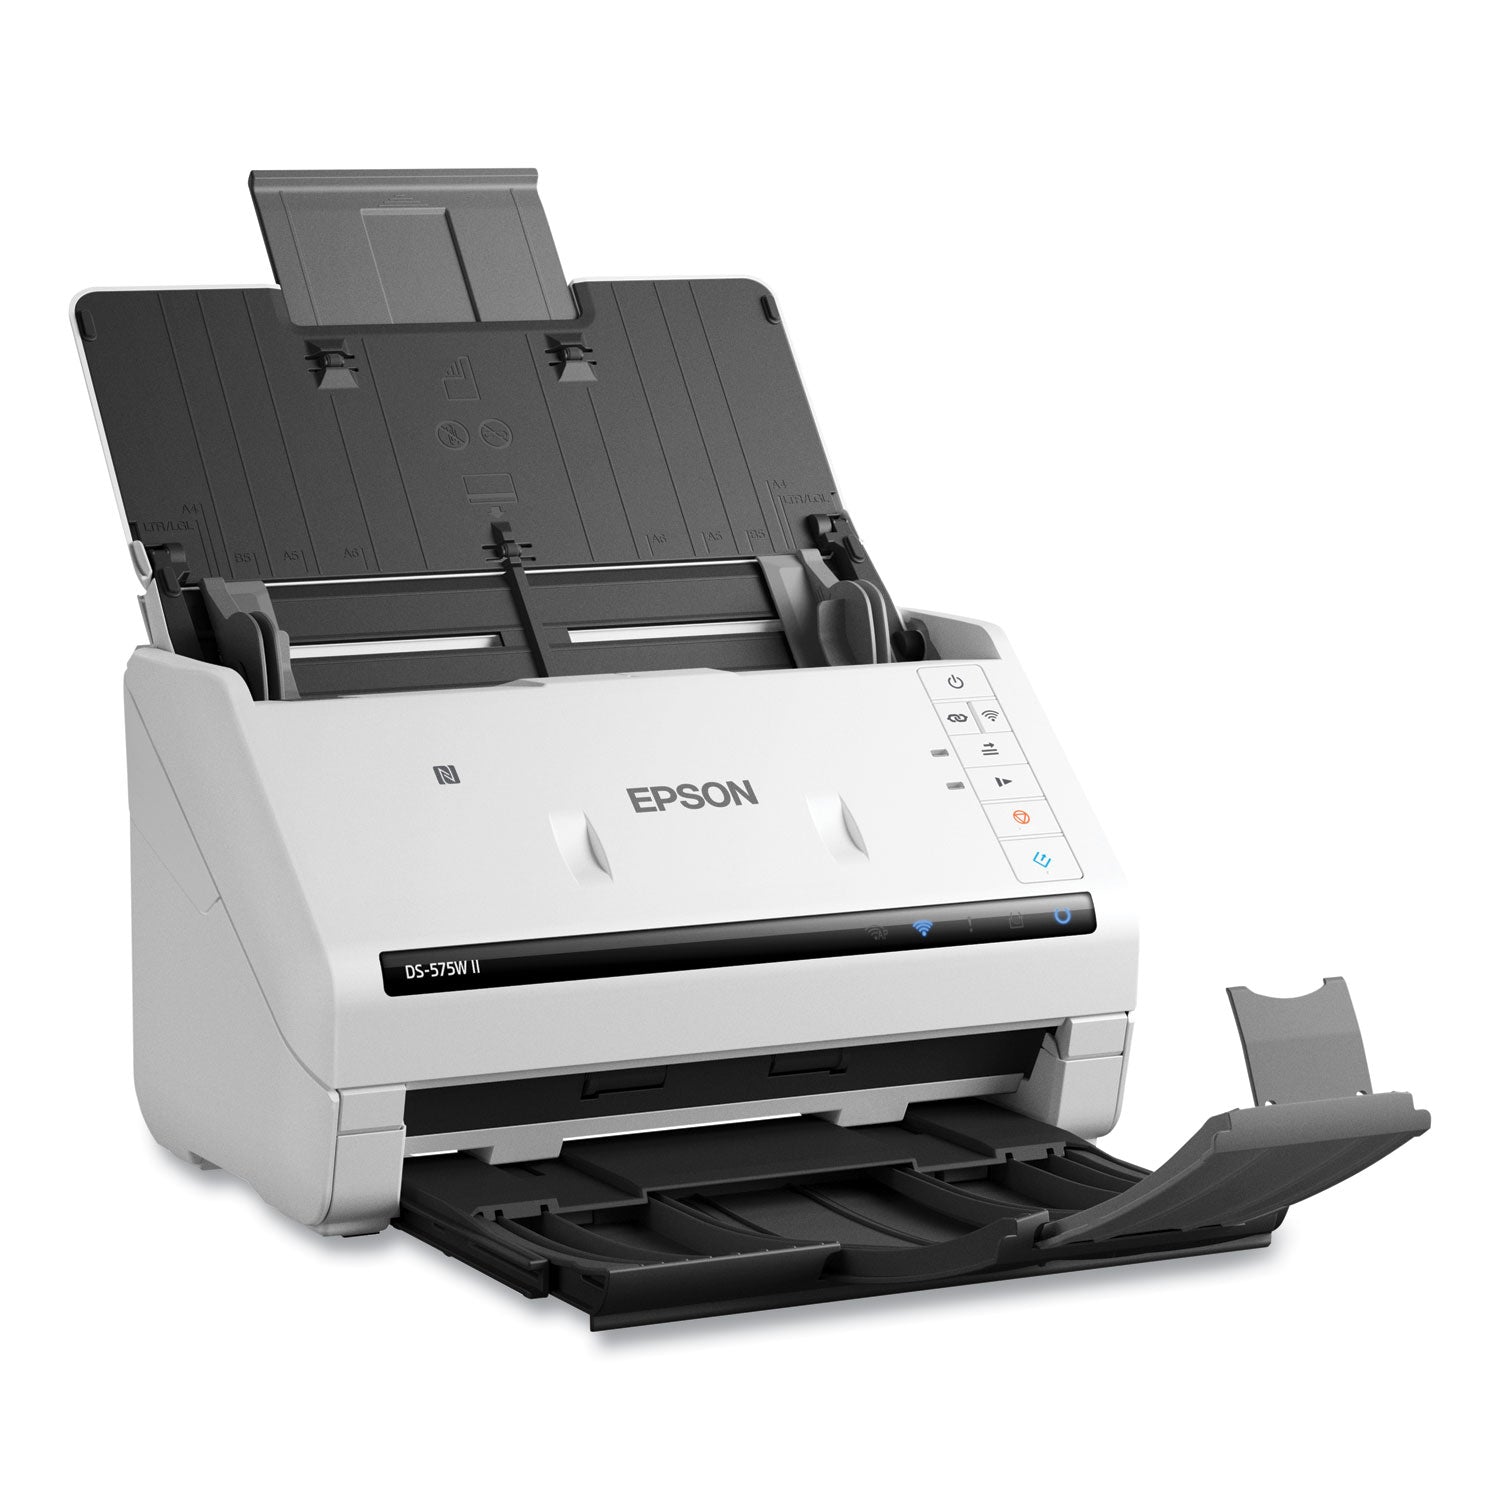 ds-575w-ii-wireless-color-duplex-document-scanner-600-dpi-optical-resolution-50-sheet-duplex-auto-document-feeder_epsb11b263202 - 3